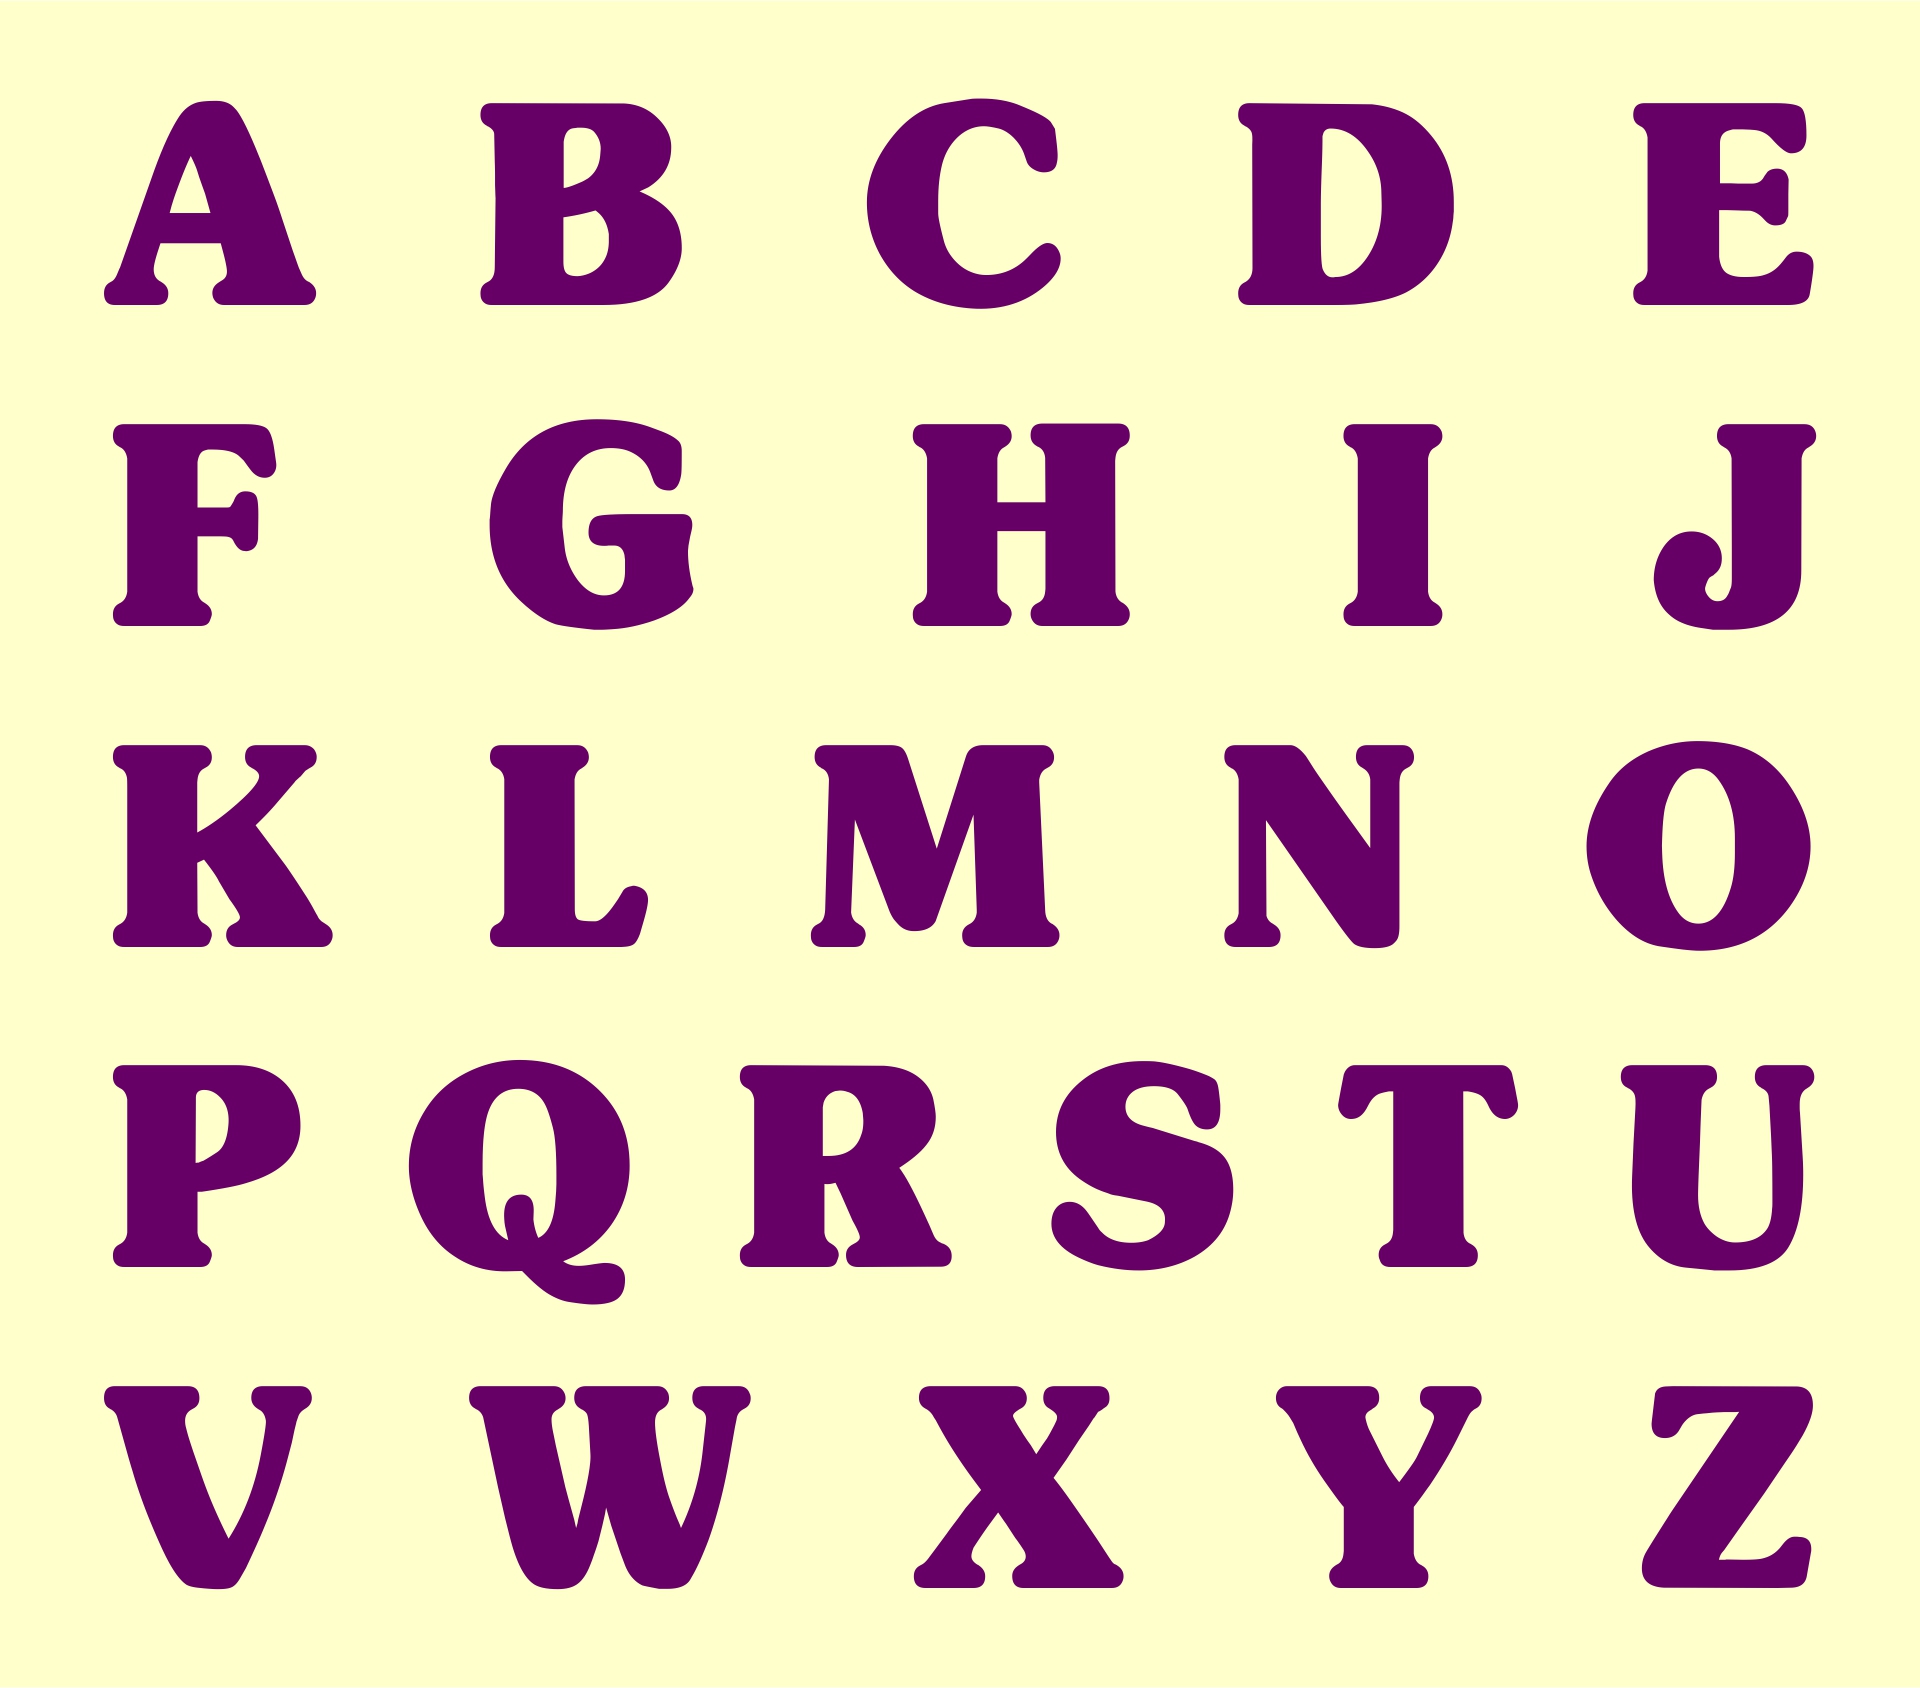 Alphabet Letter Pictures Printable